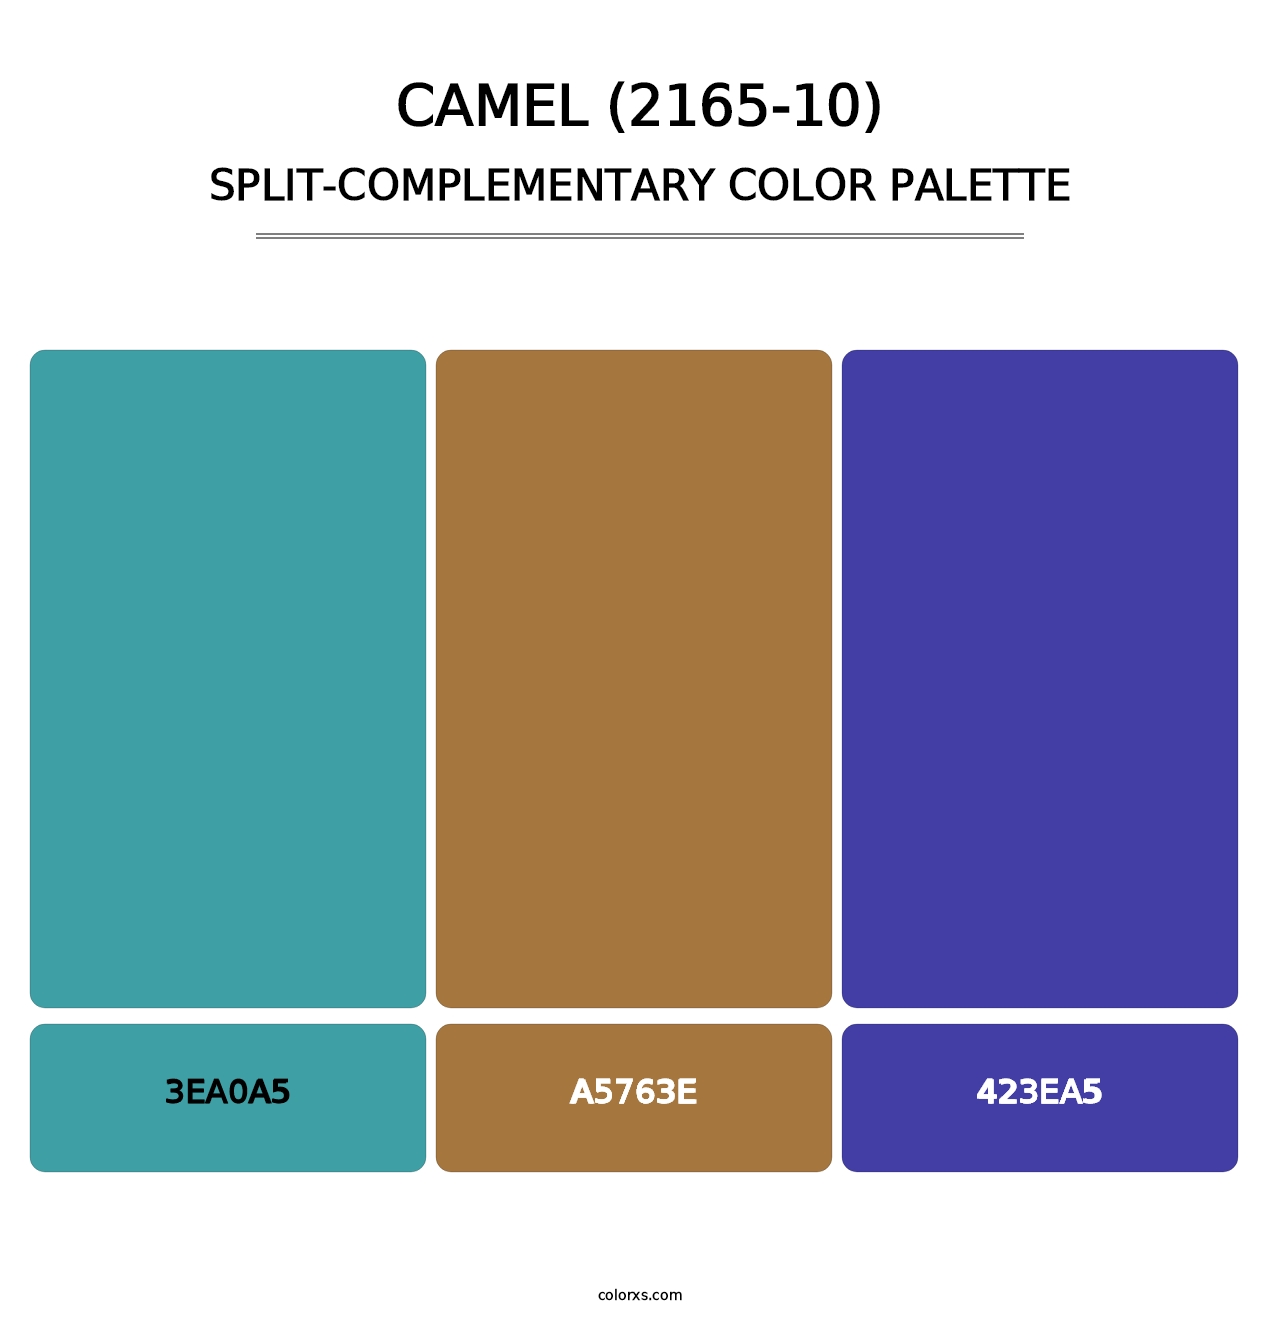 Camel (2165-10) - Split-Complementary Color Palette